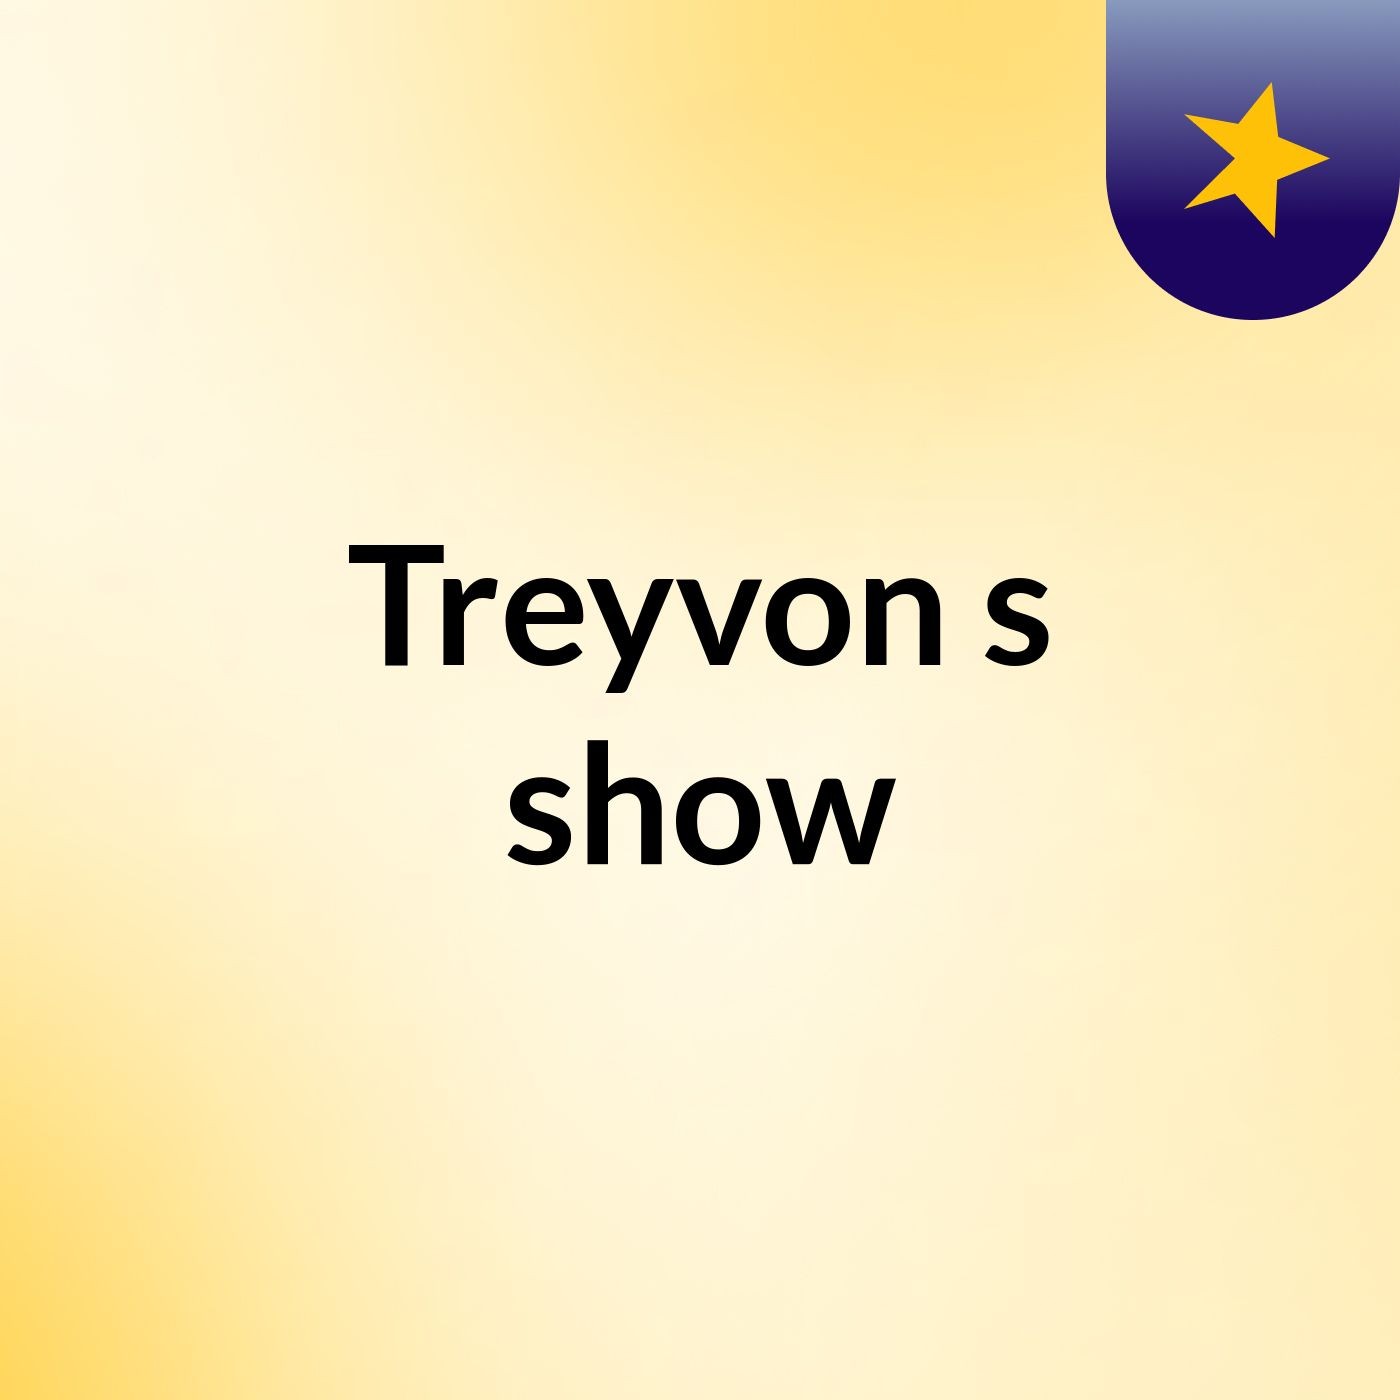 Treyvon's show